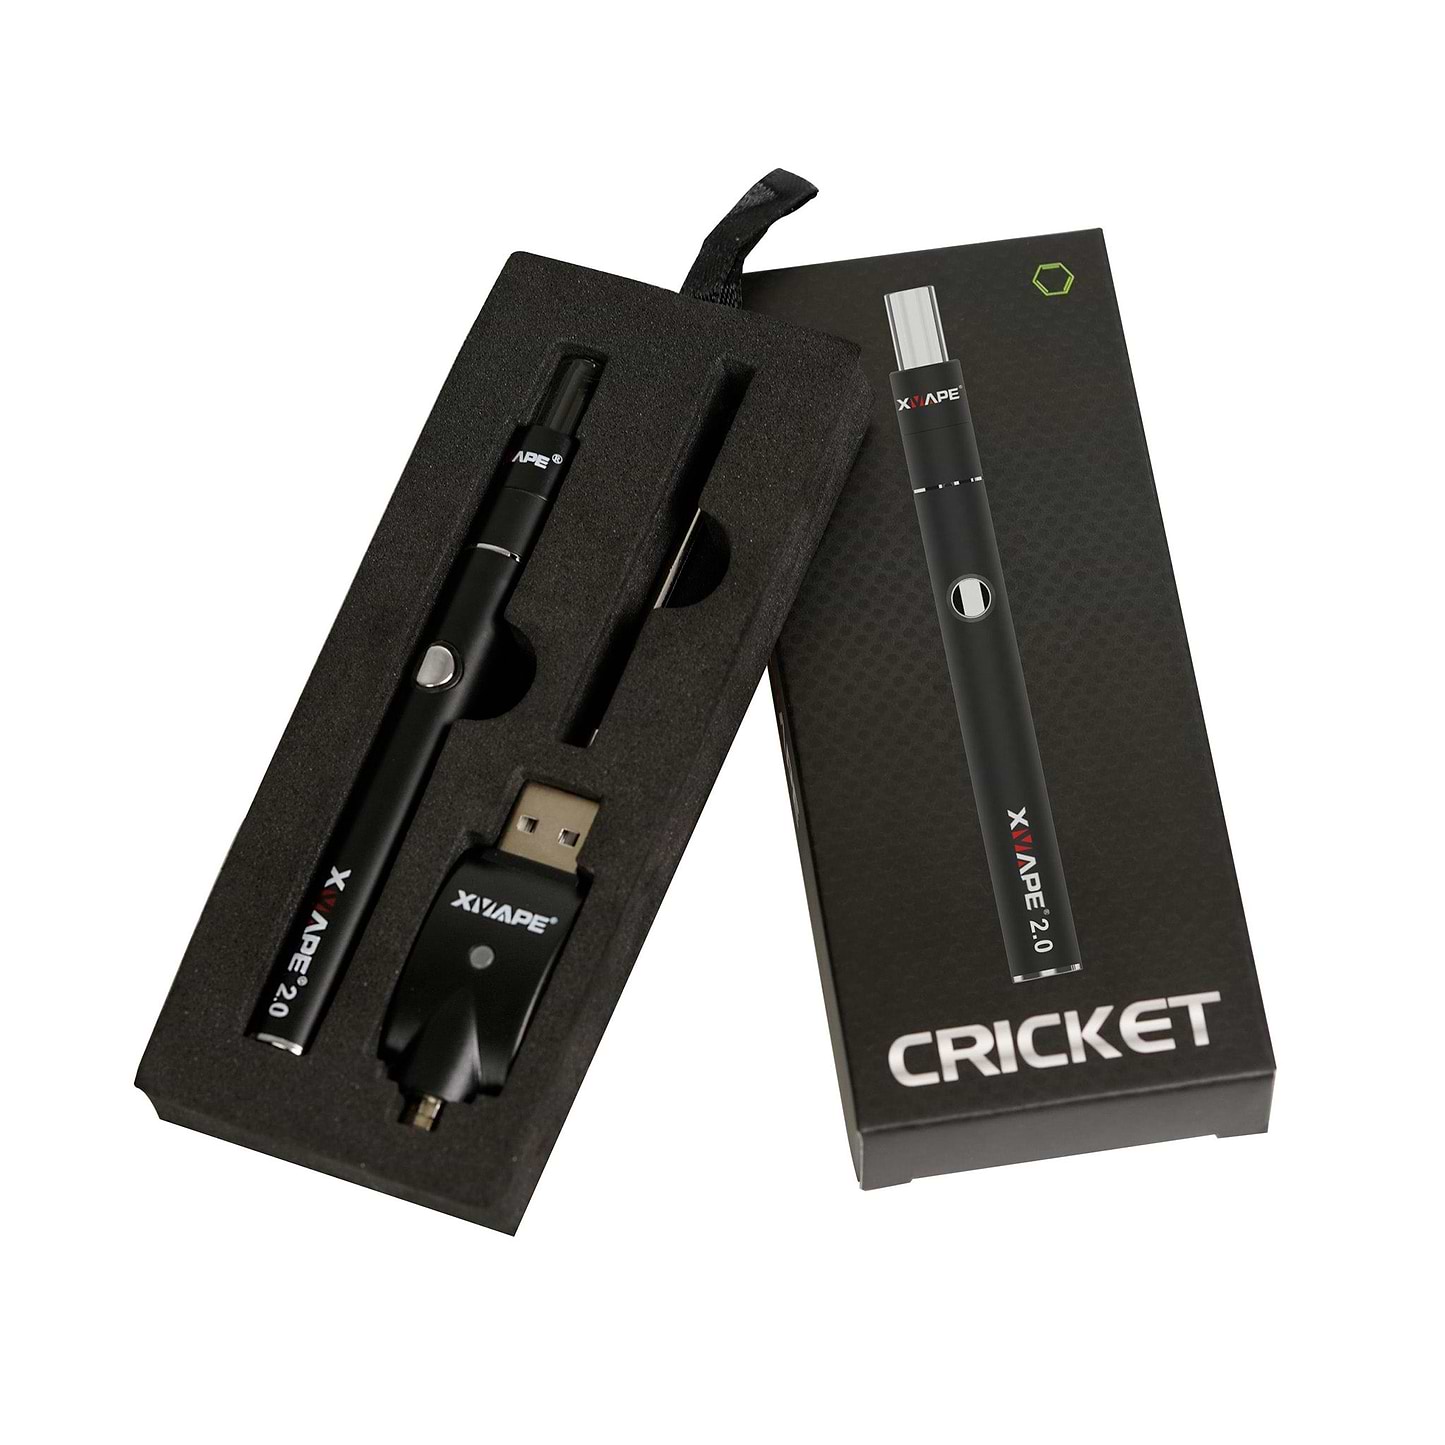 XVape Cricket+ Cartridge Vaporizer